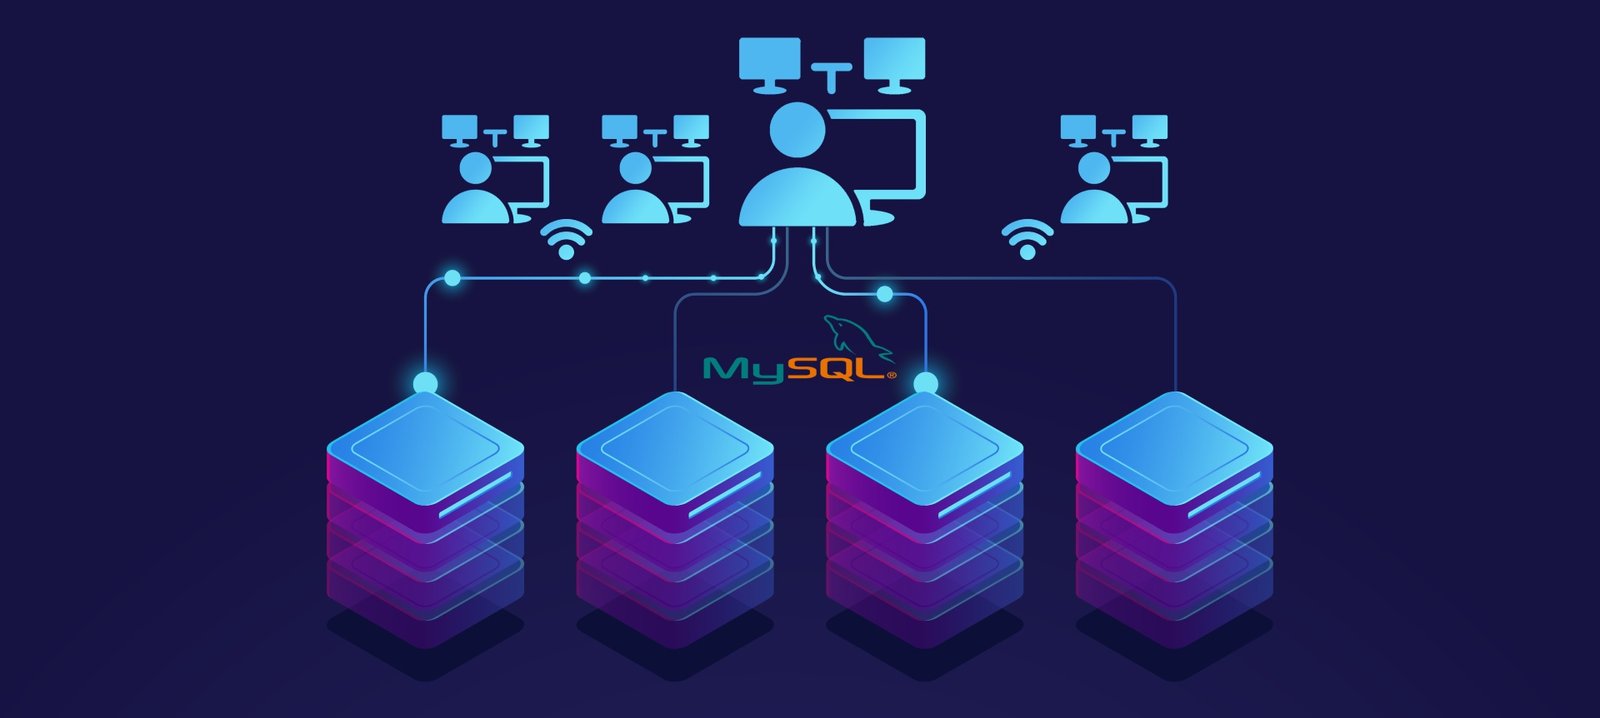 mediajayHX Media Asset Management client/server database architecture